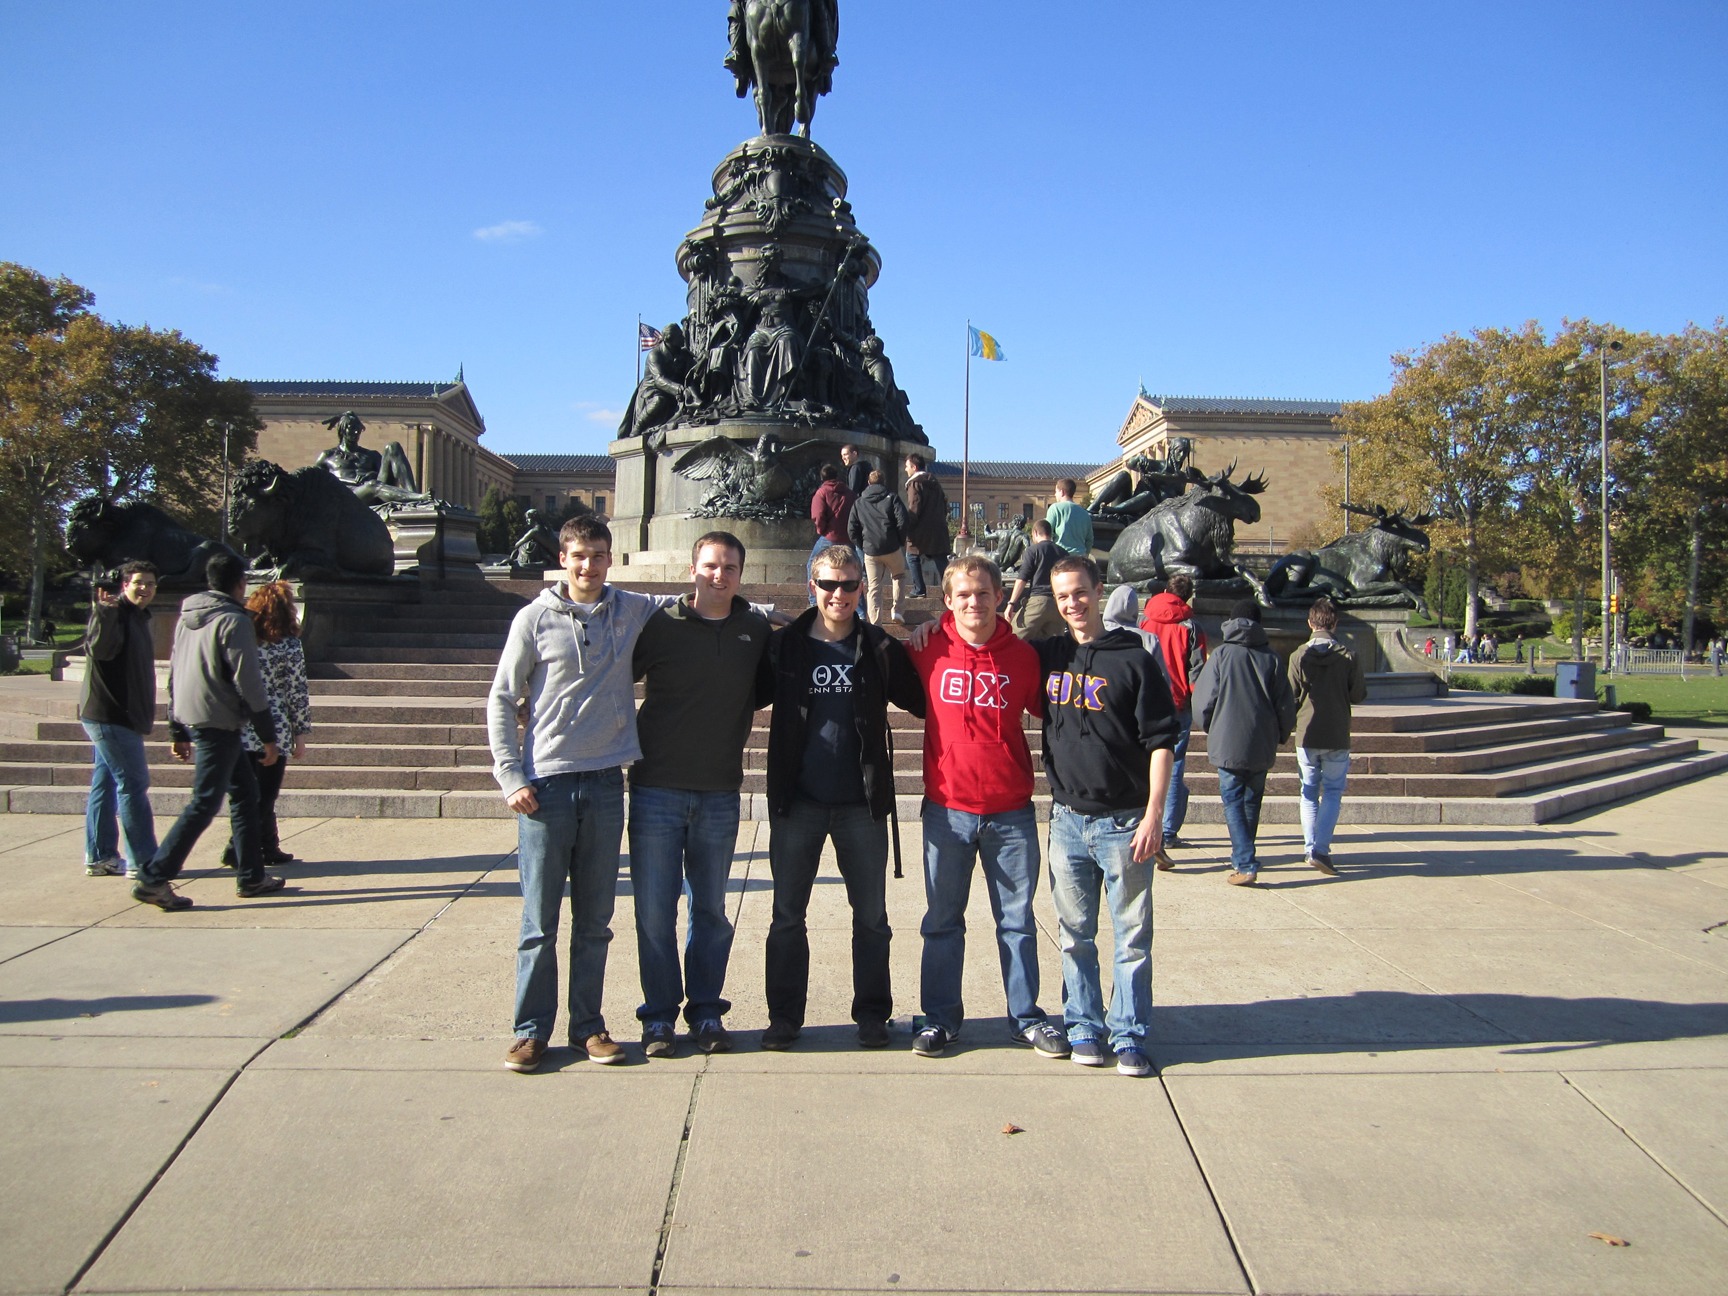  L to R: Sebastian Reigber, Jason Clark, Greg Smith, Geard Freeman, and Grant Gaston in front of the Philadelphia Art Museum
Fall 2011 